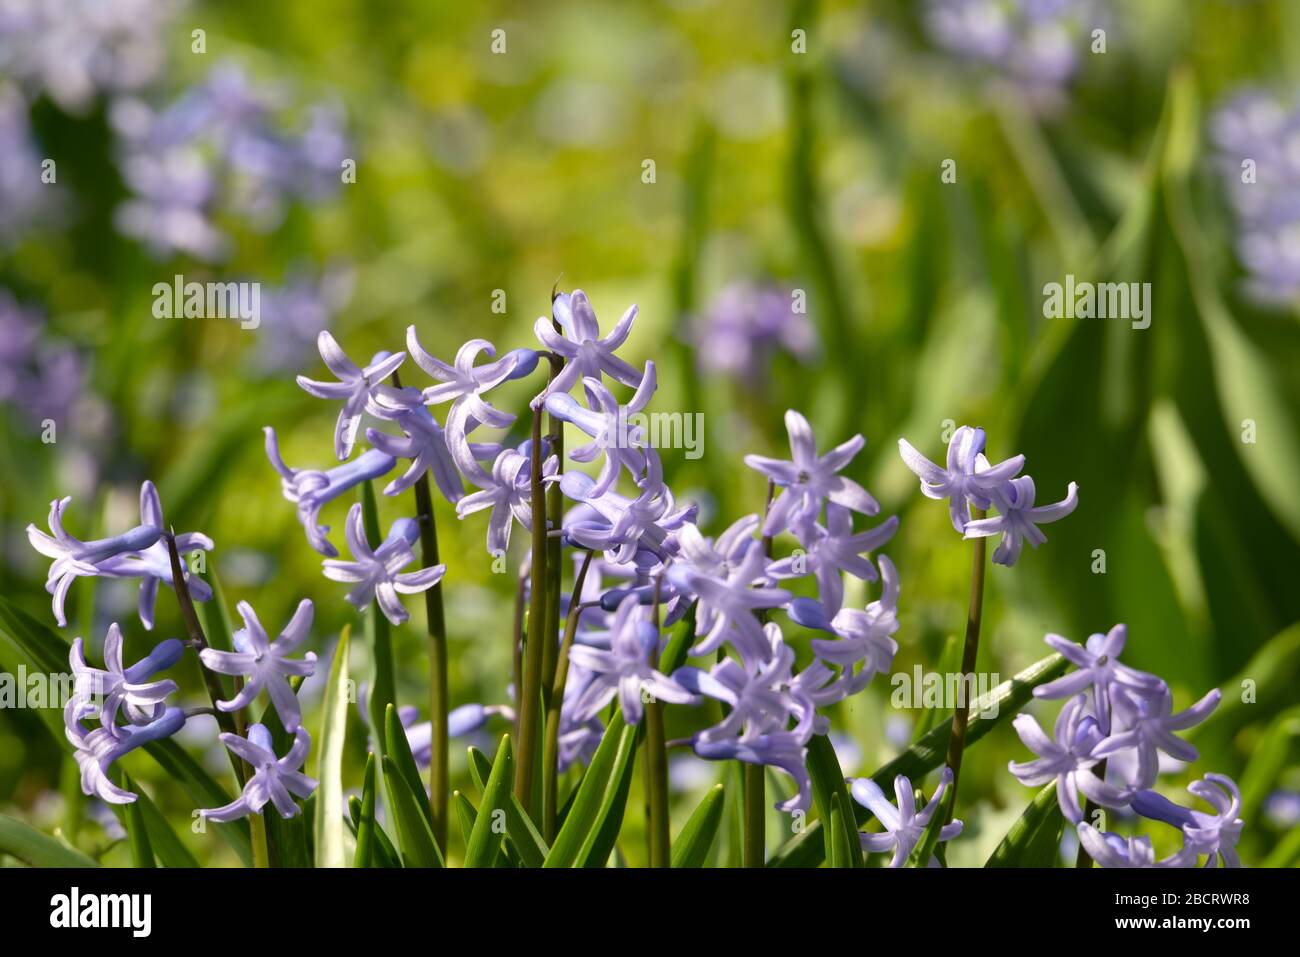 Frühlingsgarten mit violetten Hyazinthen Blüten. Stockfoto